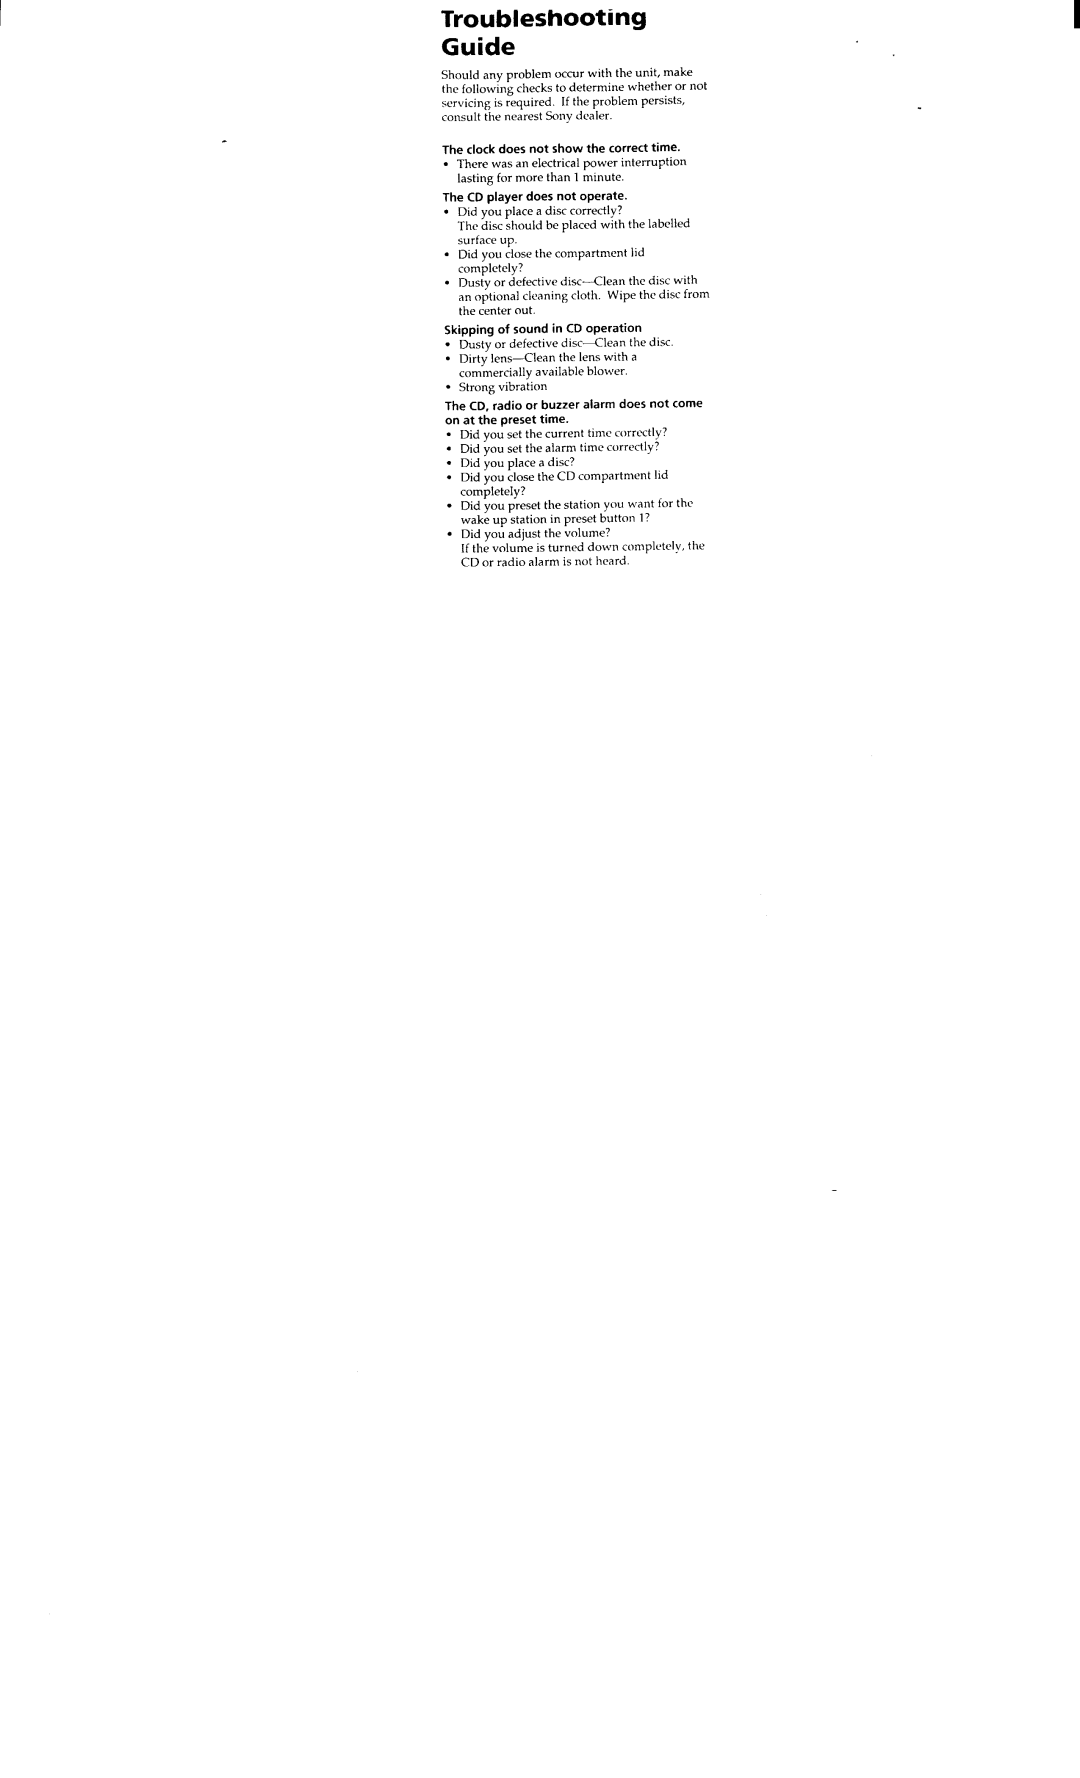 Sony ICF-CD833 manual 